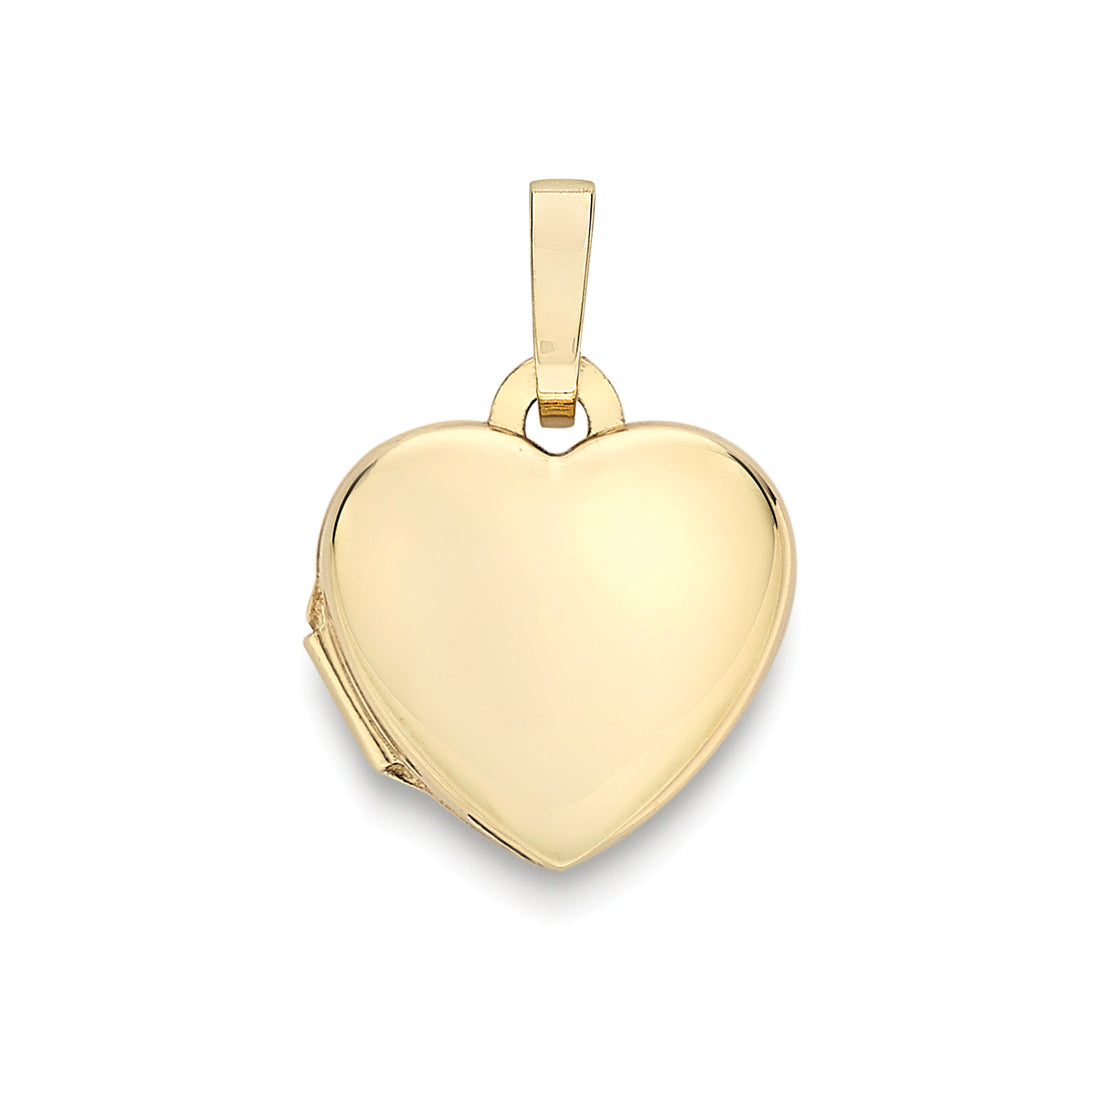 9ct. Yellow Gold Heart-Shaped Locket - Robert Anthony Jewellers, Edinburgh